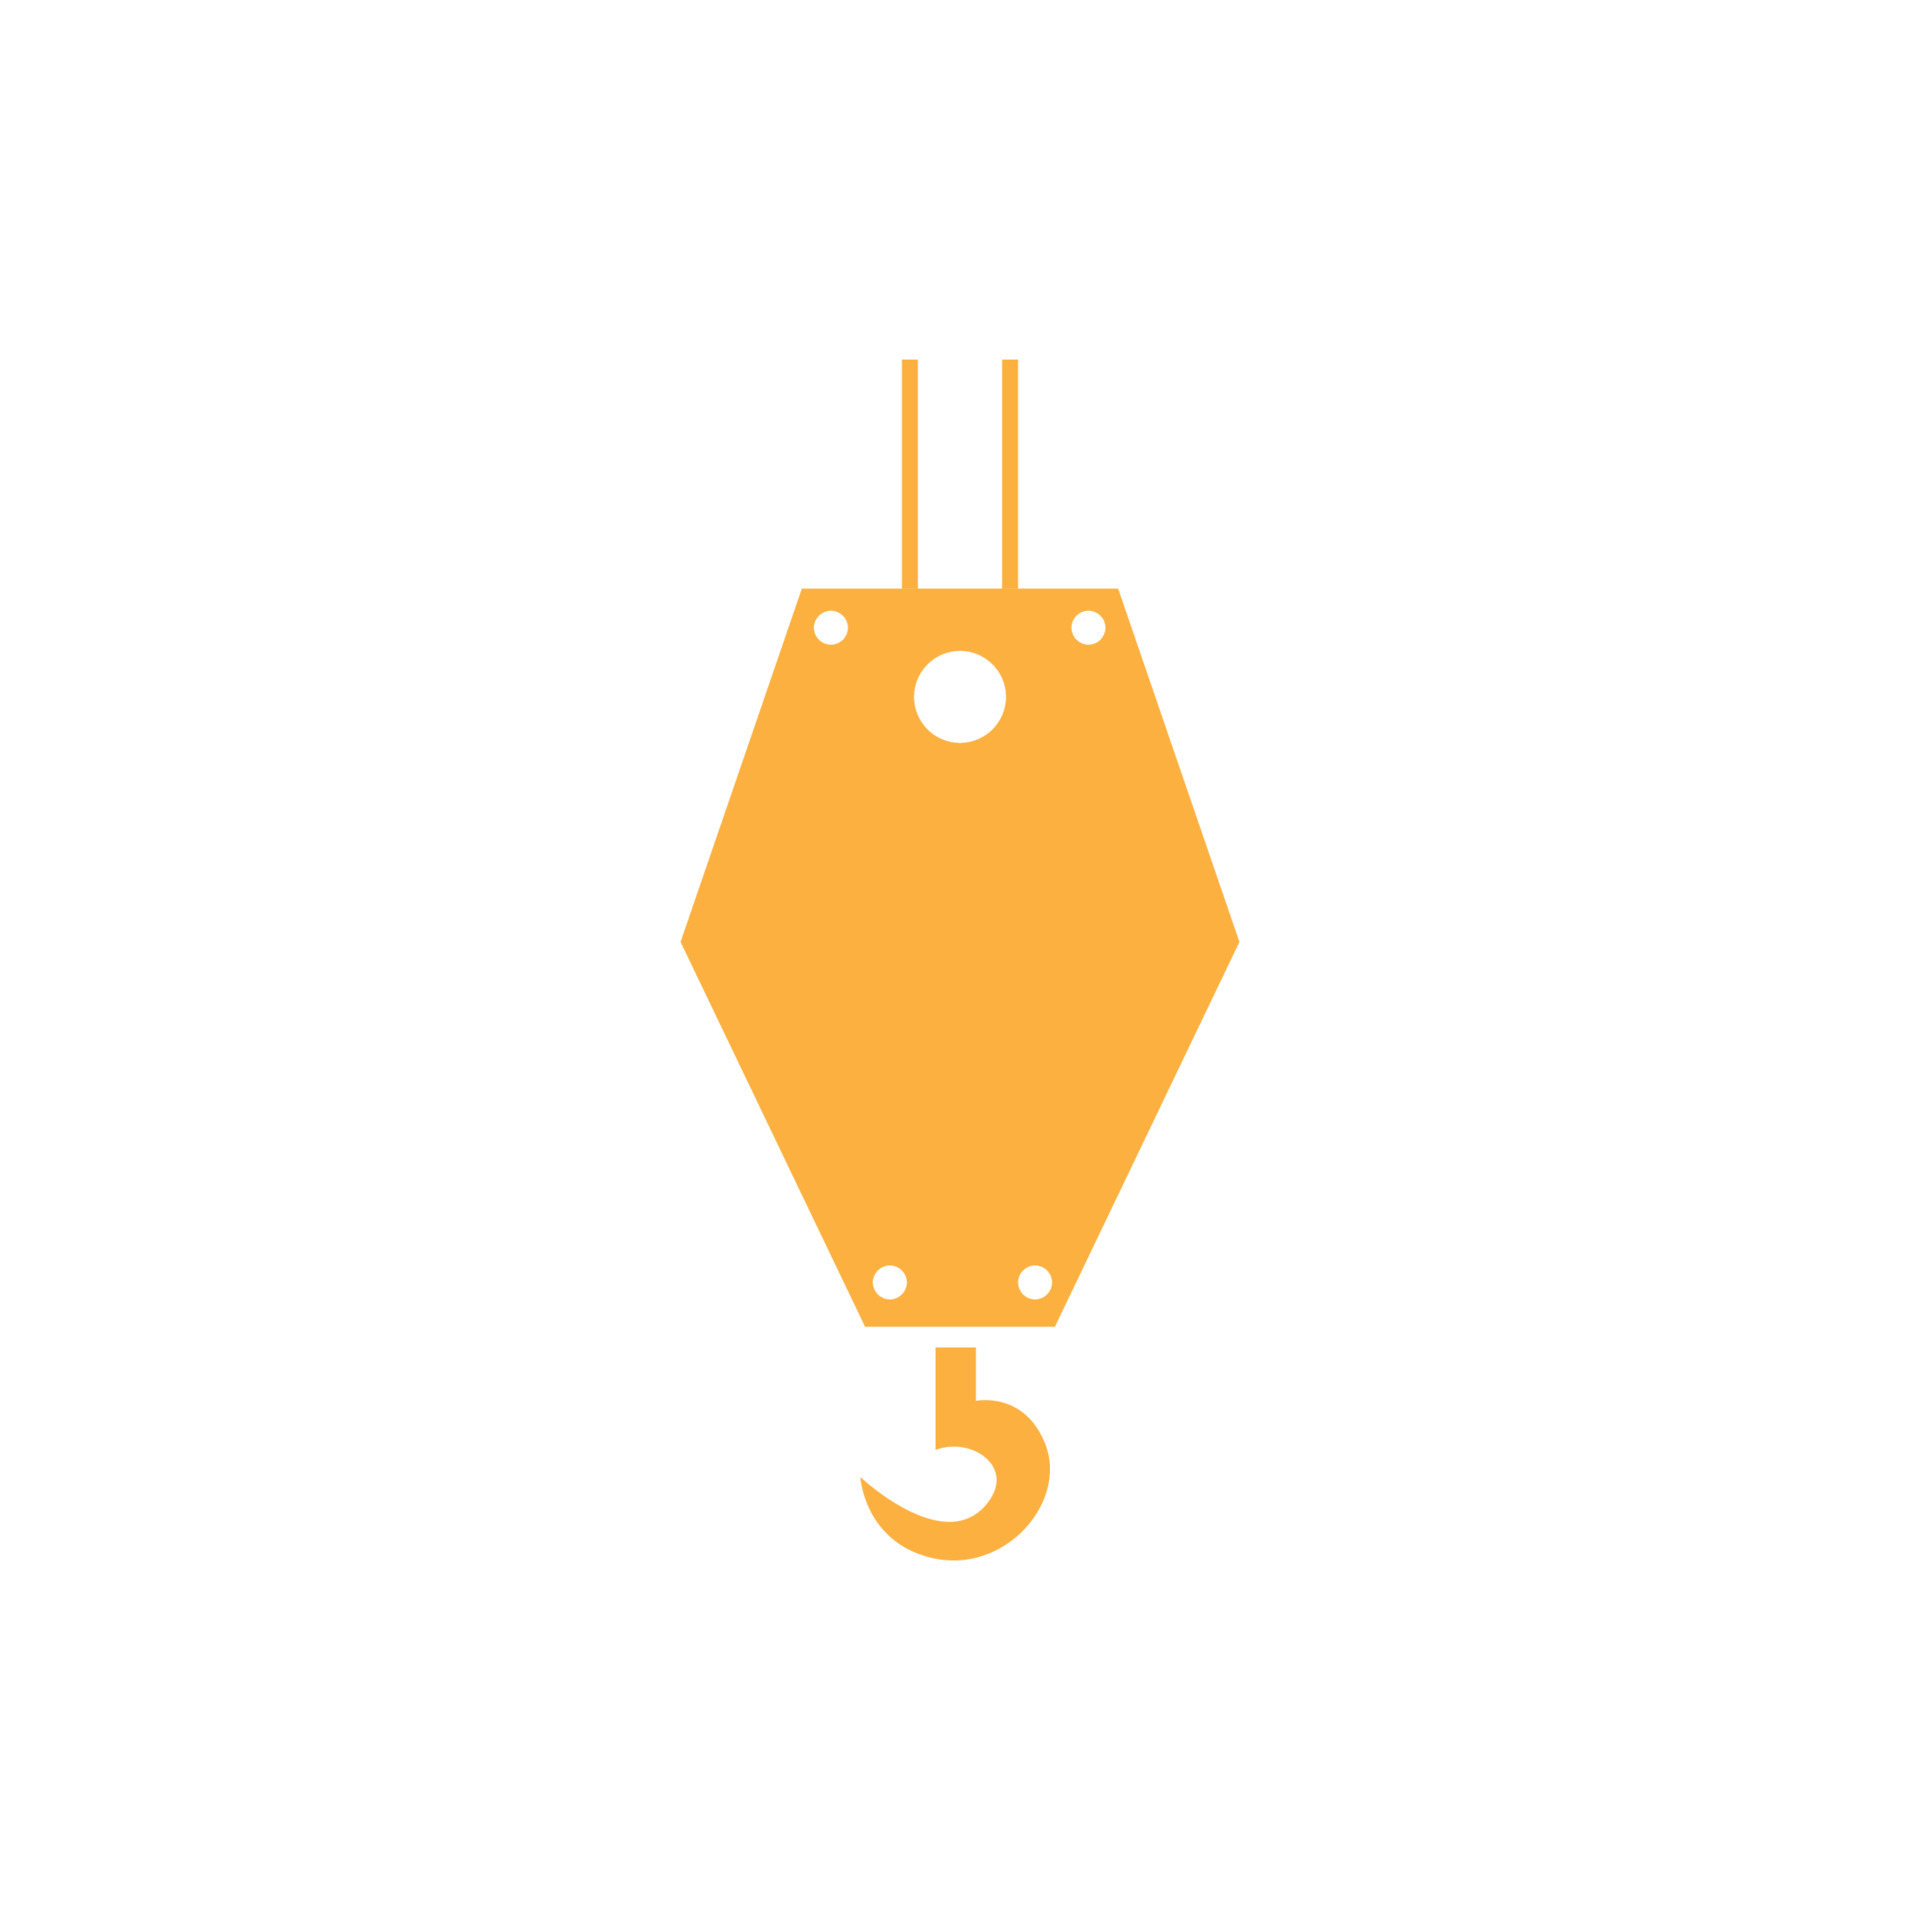 Lifting hook simple modern logo design vector graphic symbol icon